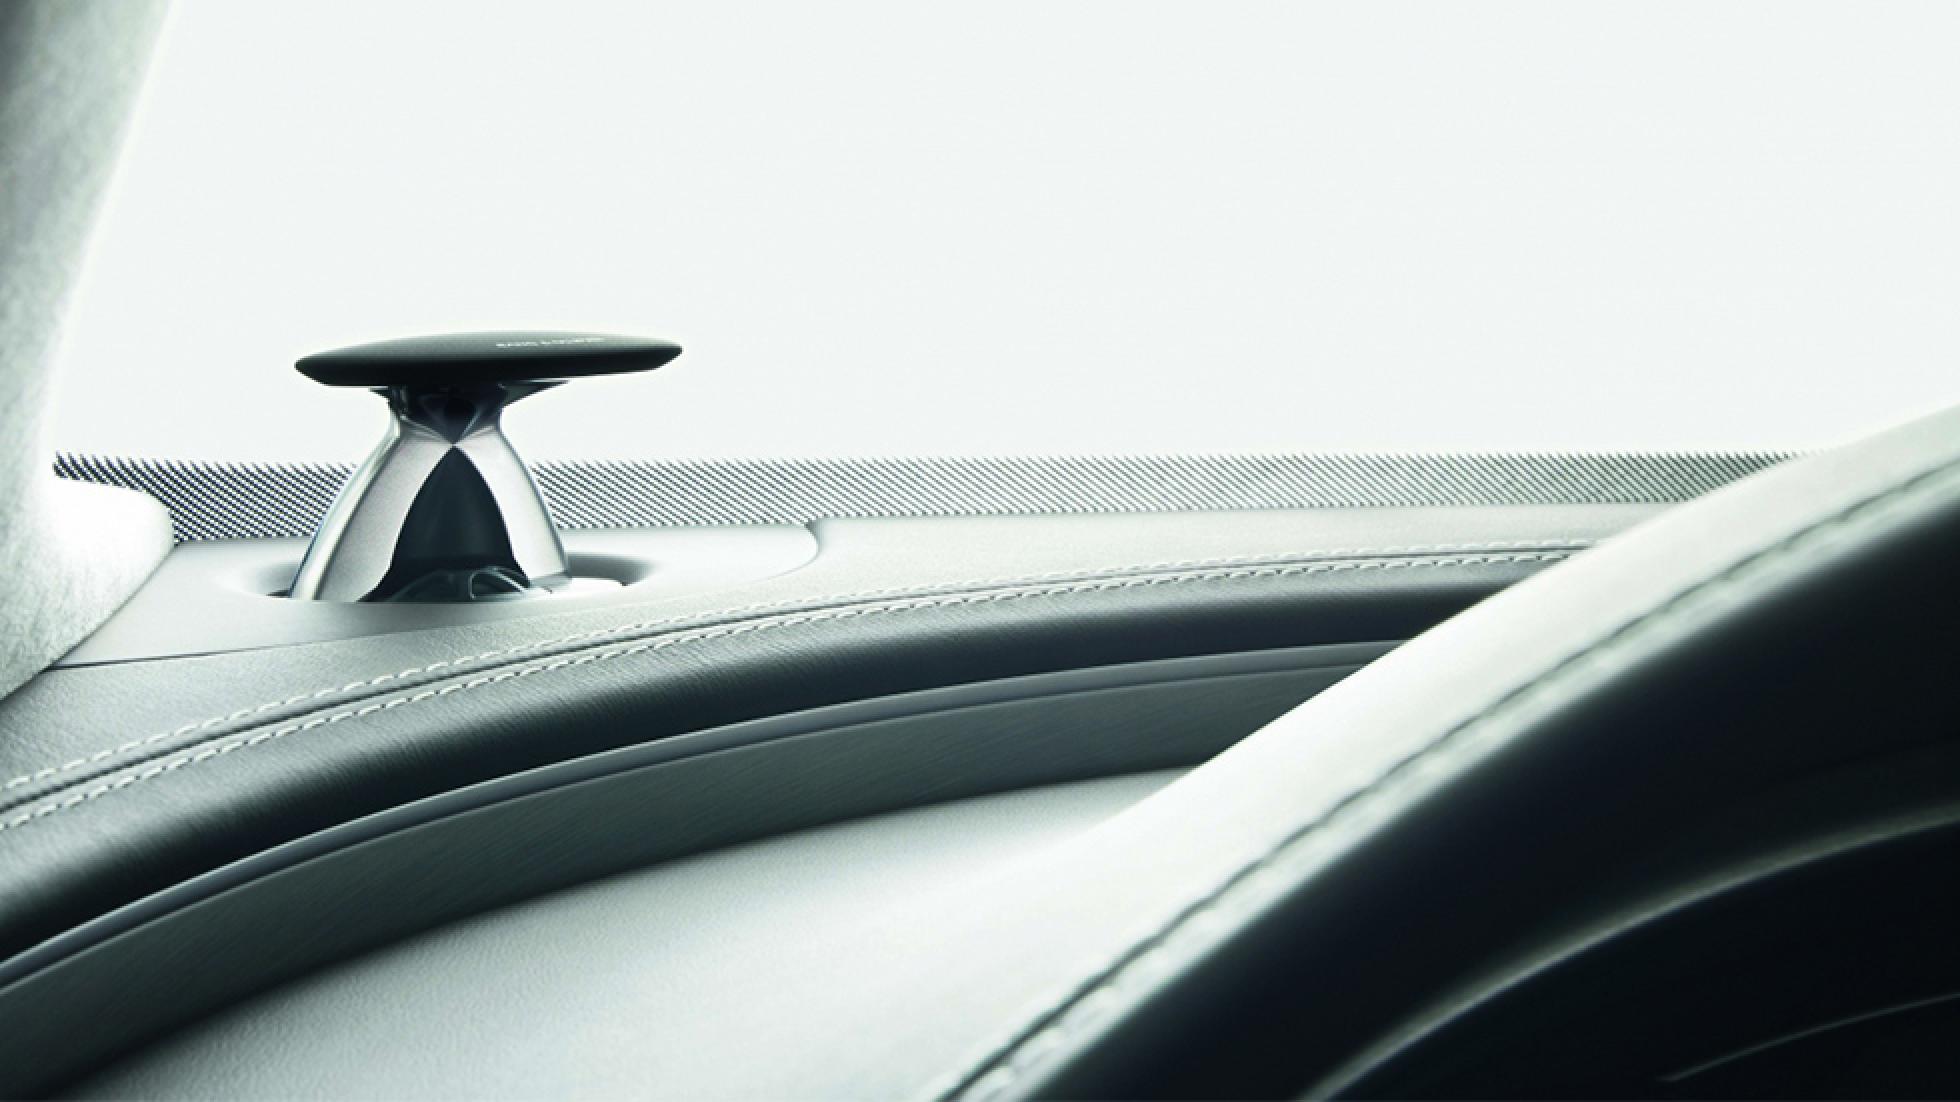 7. Audi A8 – Bang & Olufsen speakers